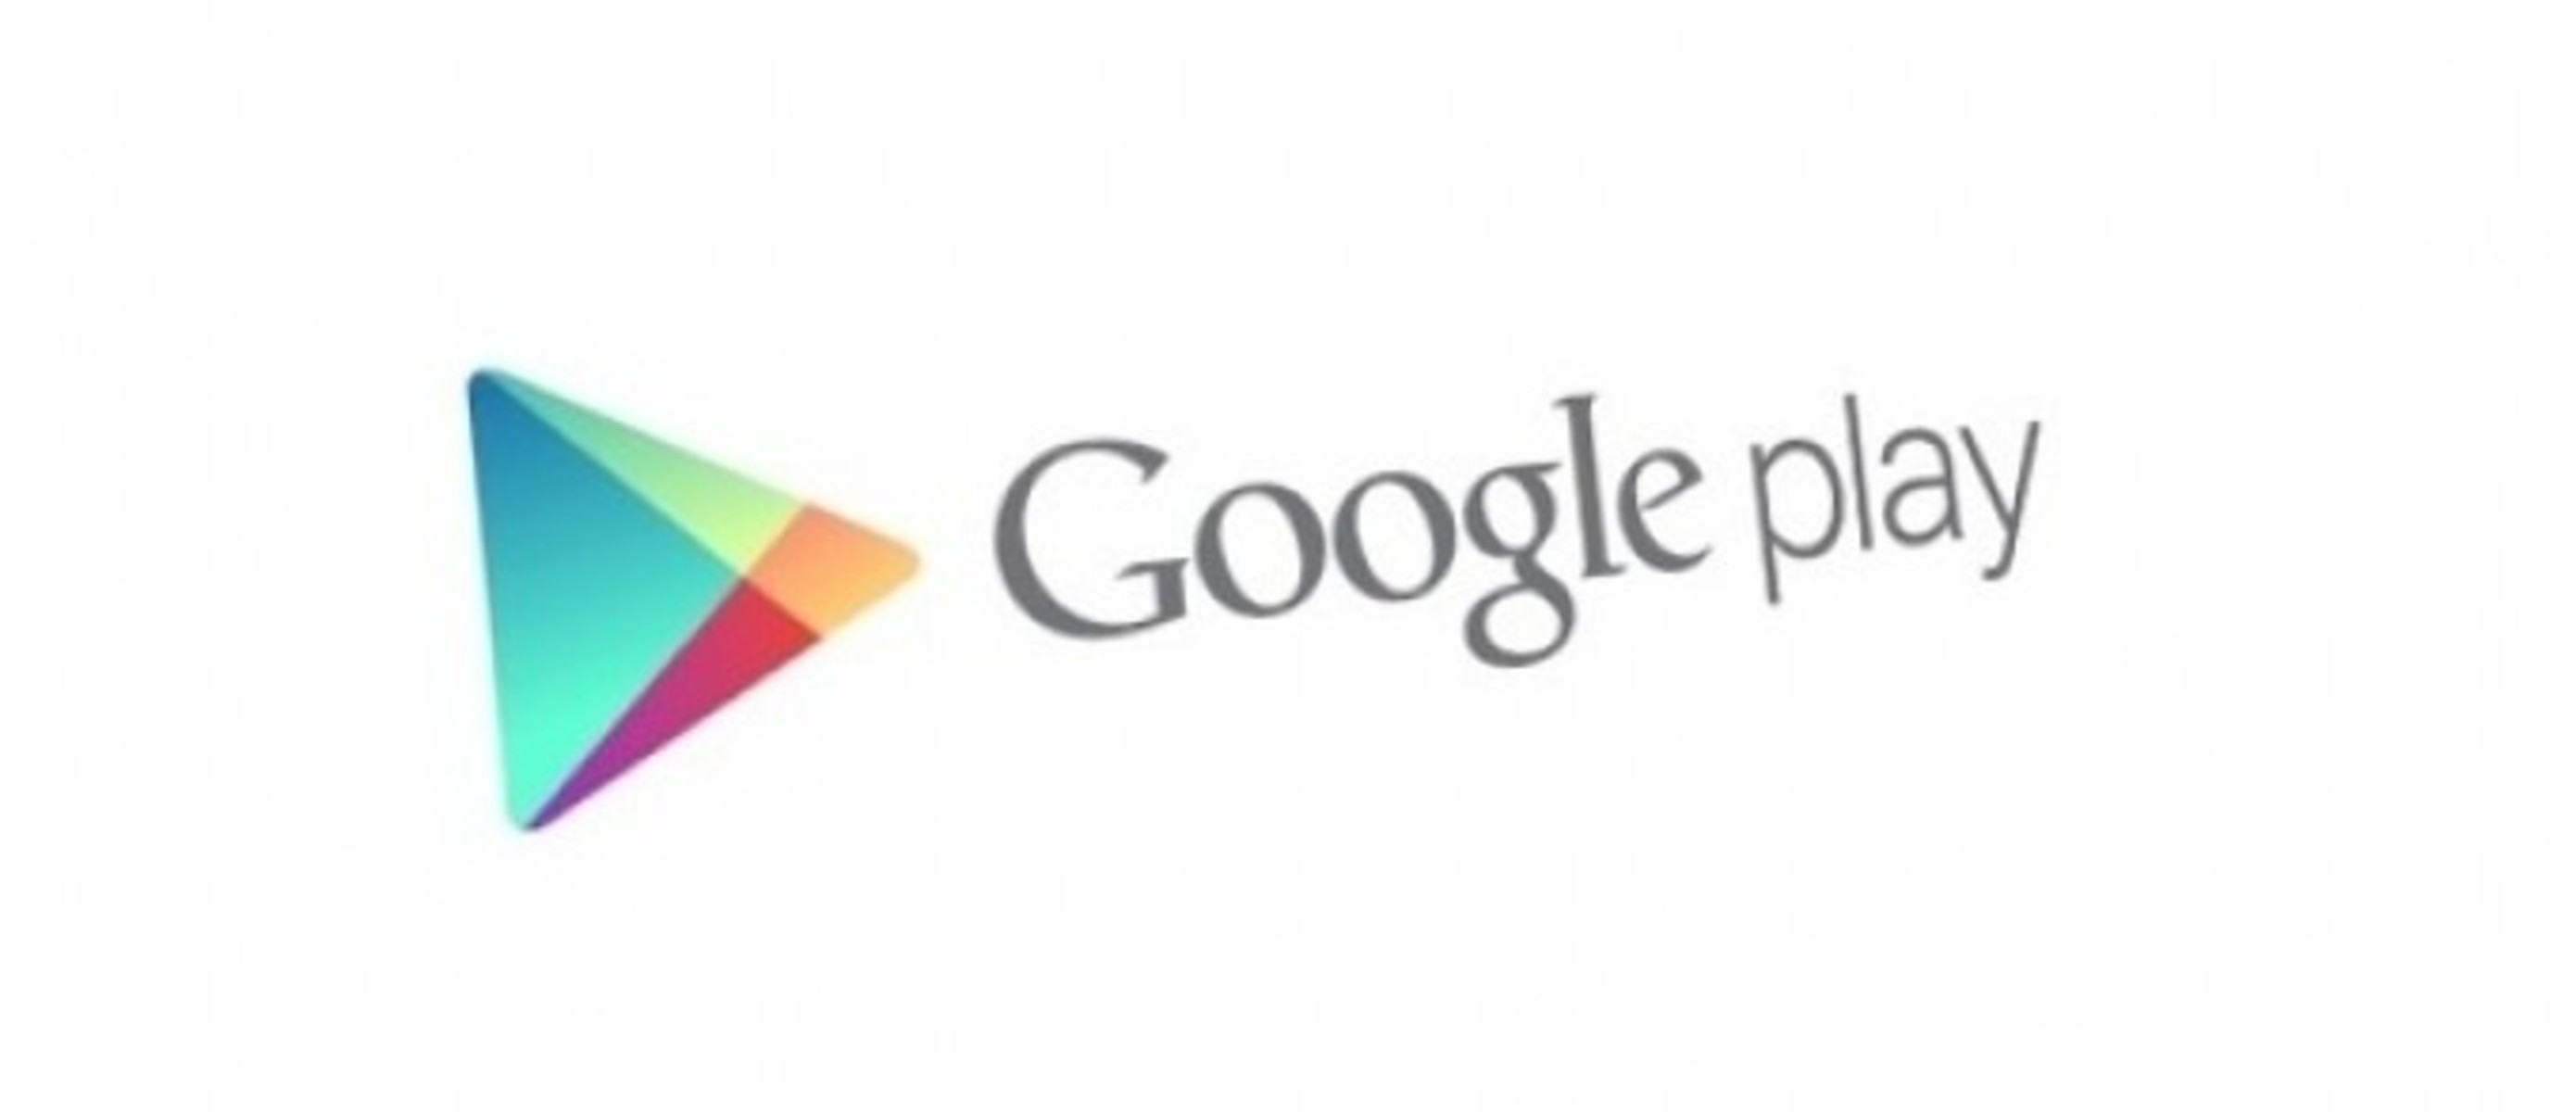 Название google play. Google Play. Google Play аватарка. Google Play крест\. Google Play 2014.